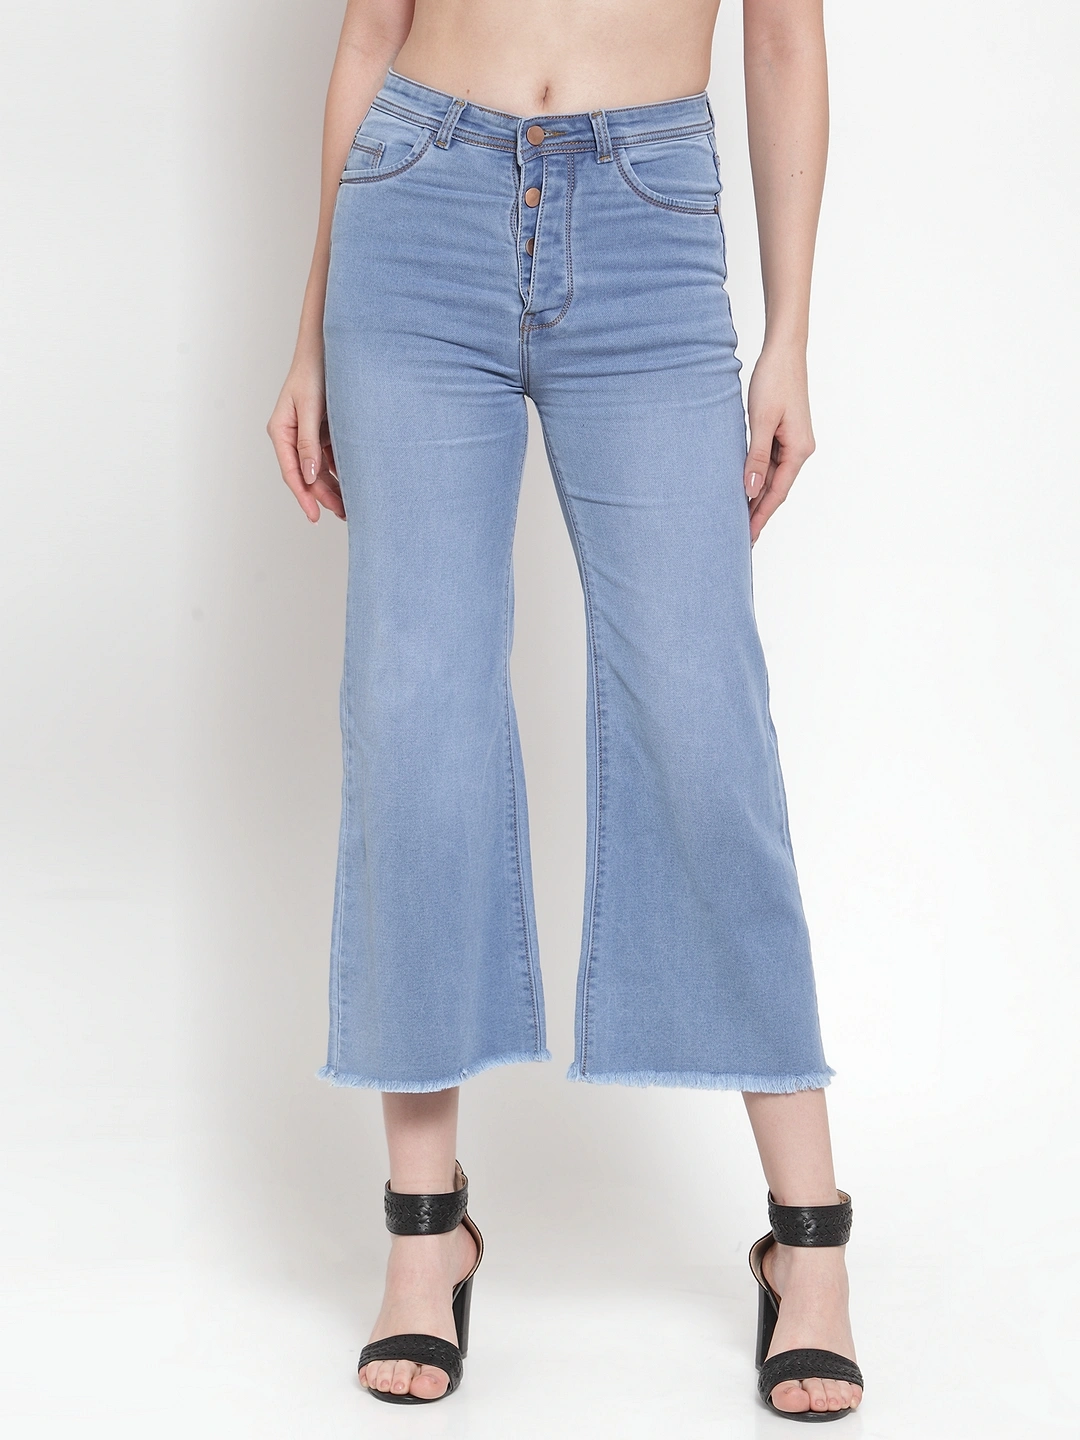 River of Design Ivana Button Fly Jeans-28-Light Blue-1